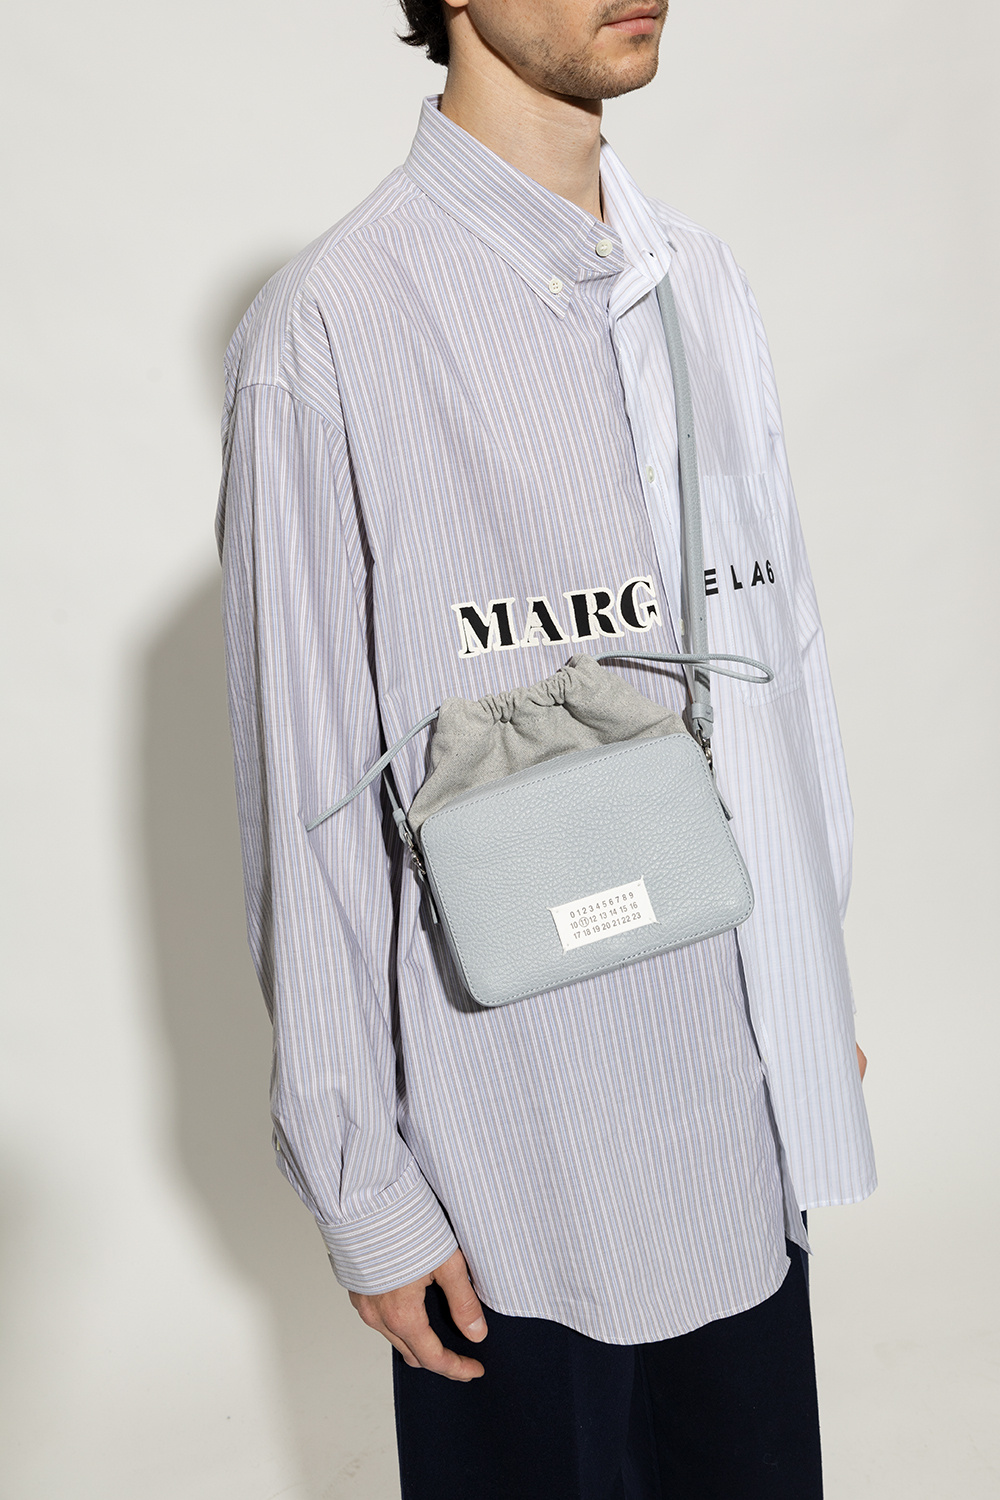 Maison Margiela ‘5AC Small’ shoulder Giallo bag